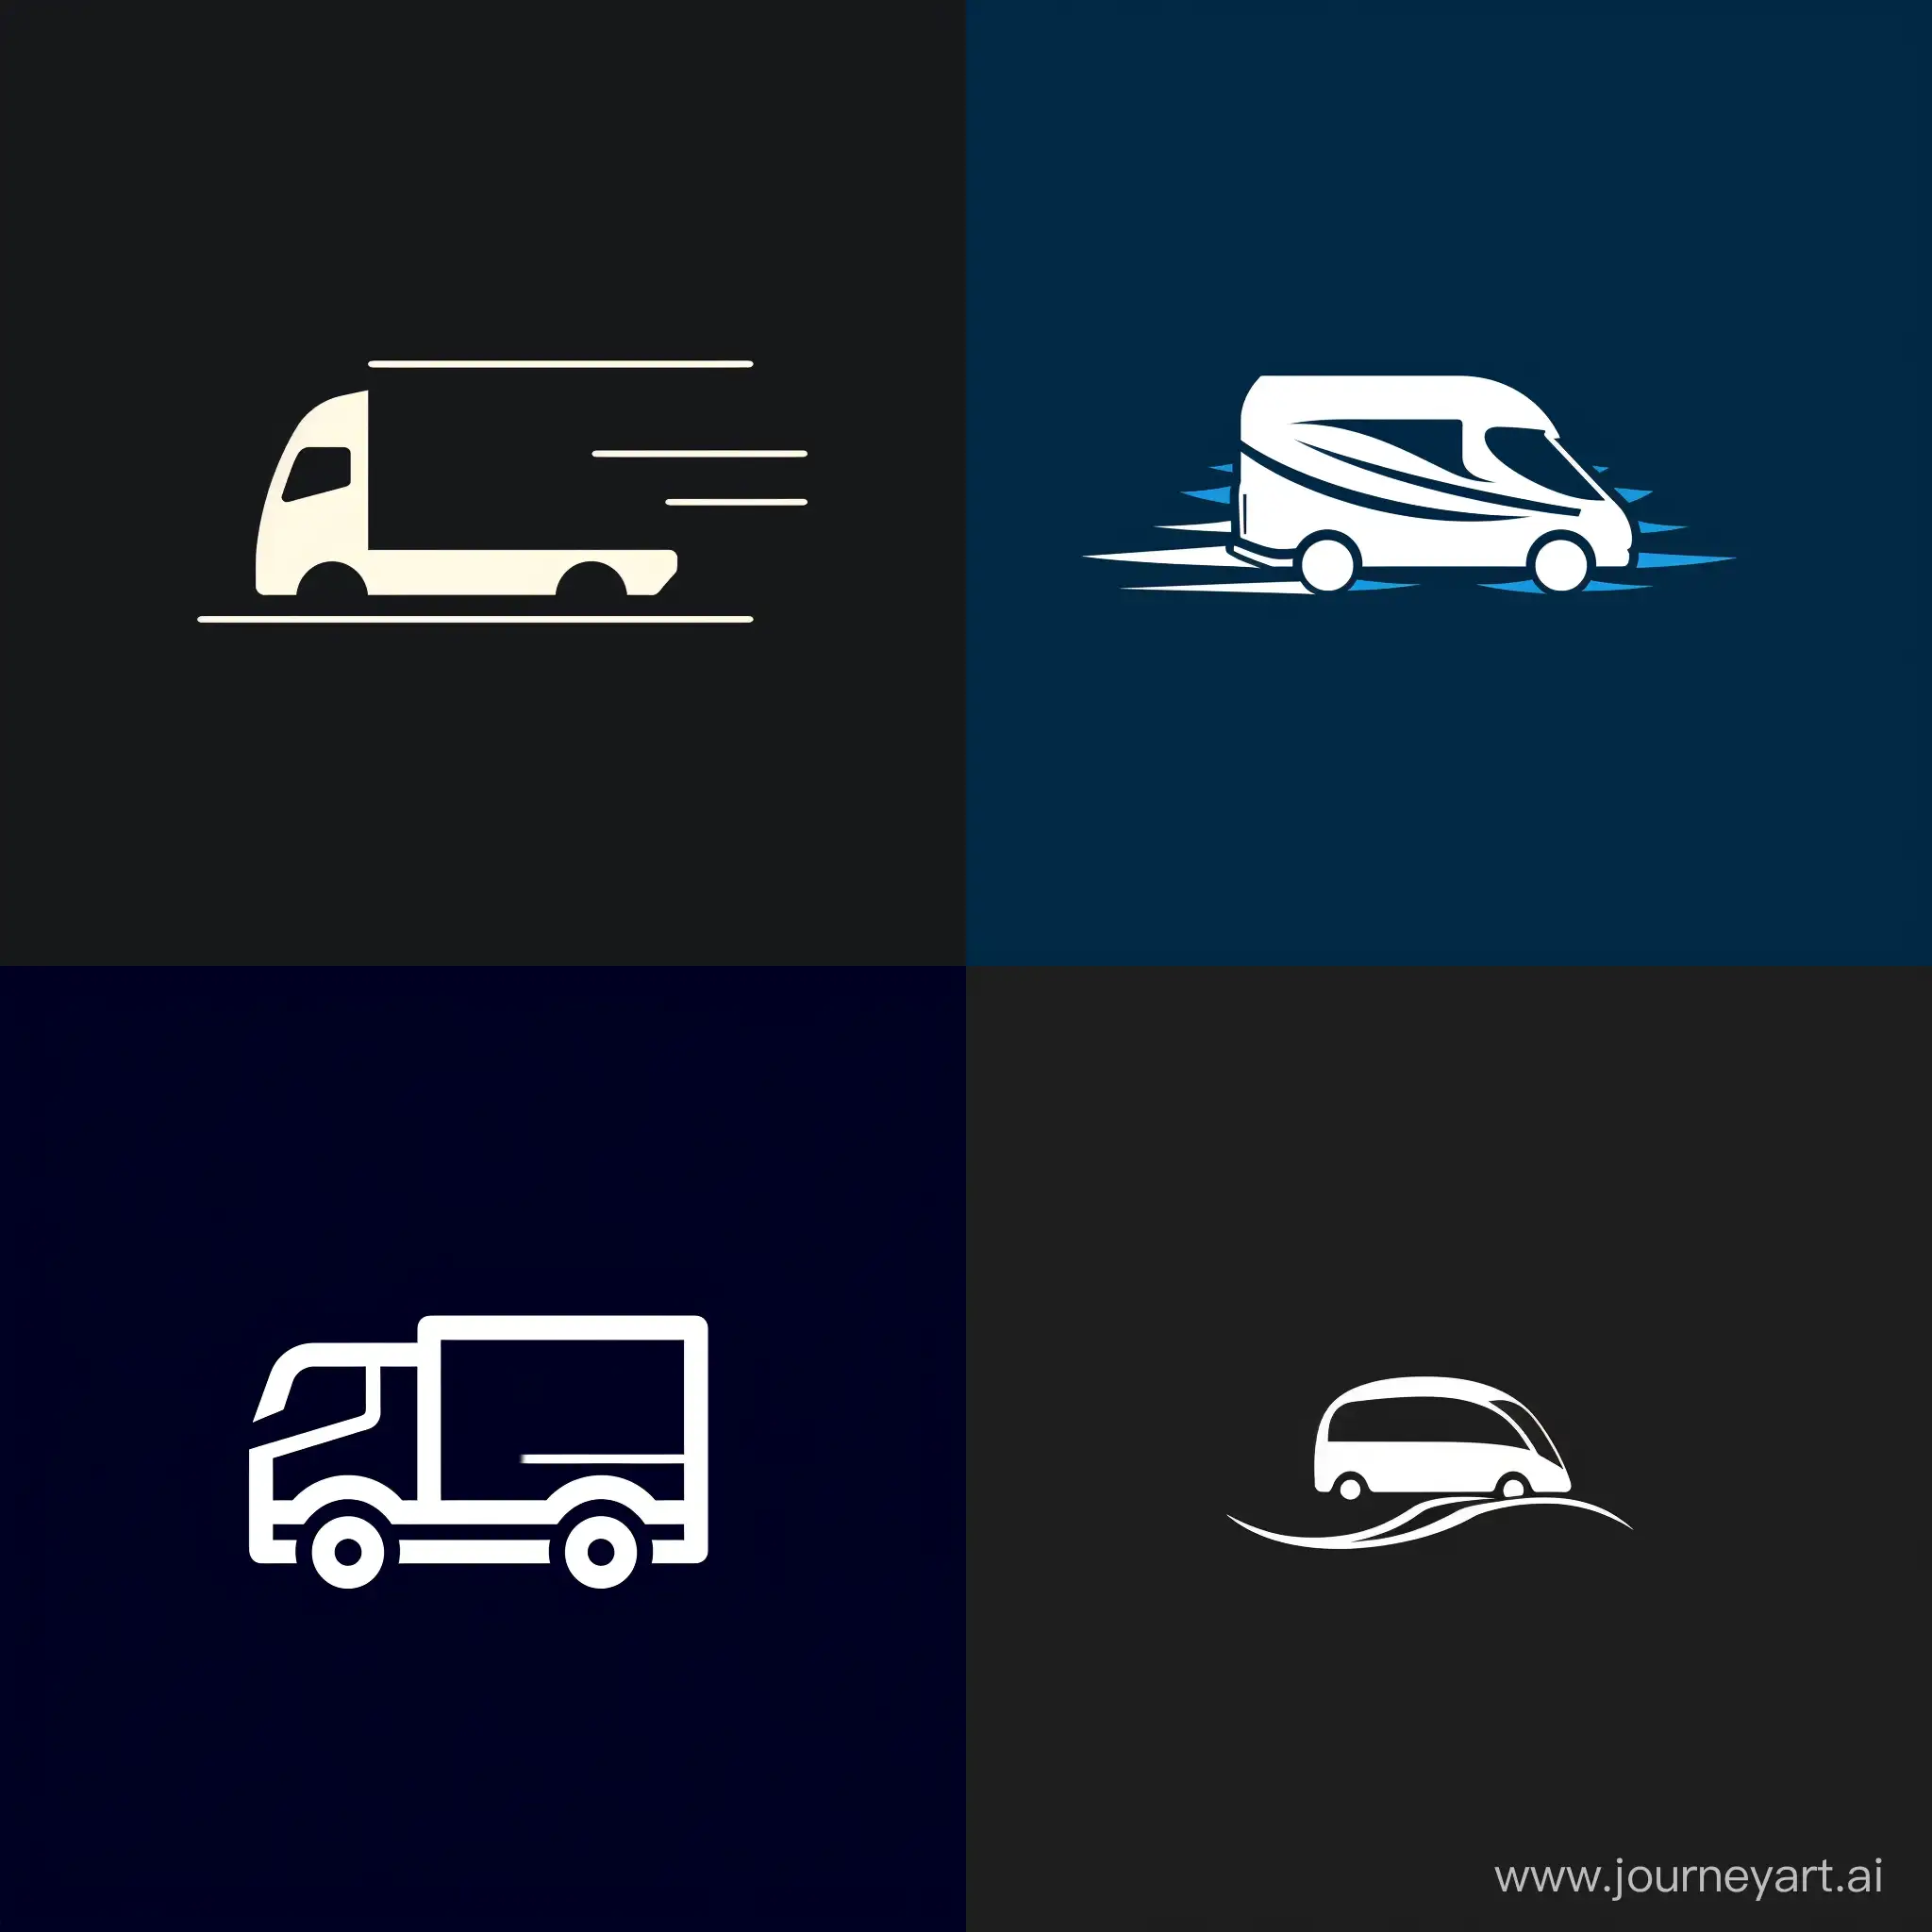 logo for a transportation company, minimalism